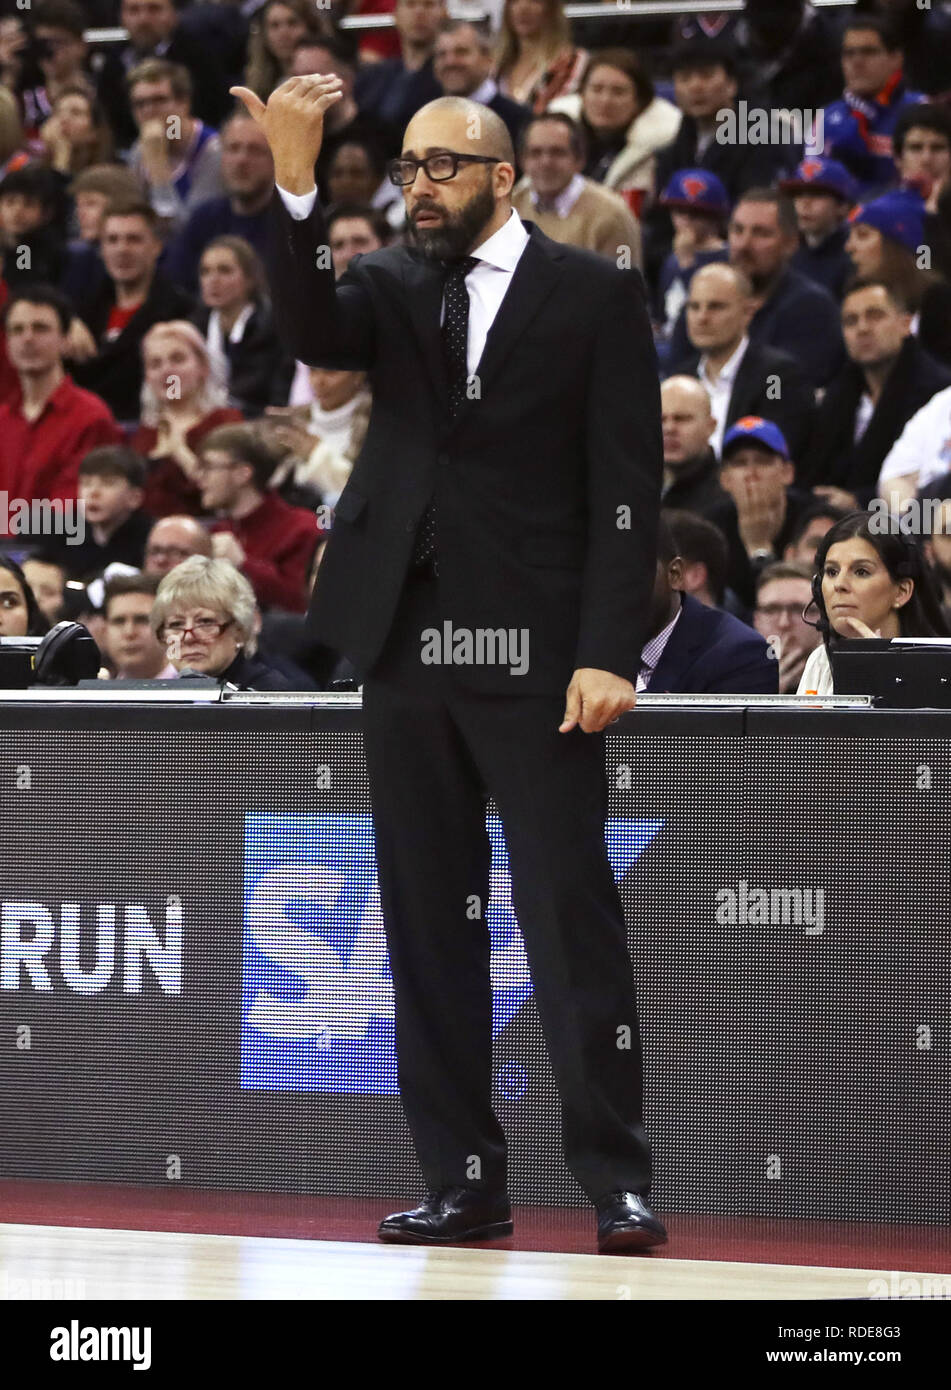 New York Knicks Head Coach David Fizdale während der NBA London Game 2019 in der O2 Arena in London. Stockfoto